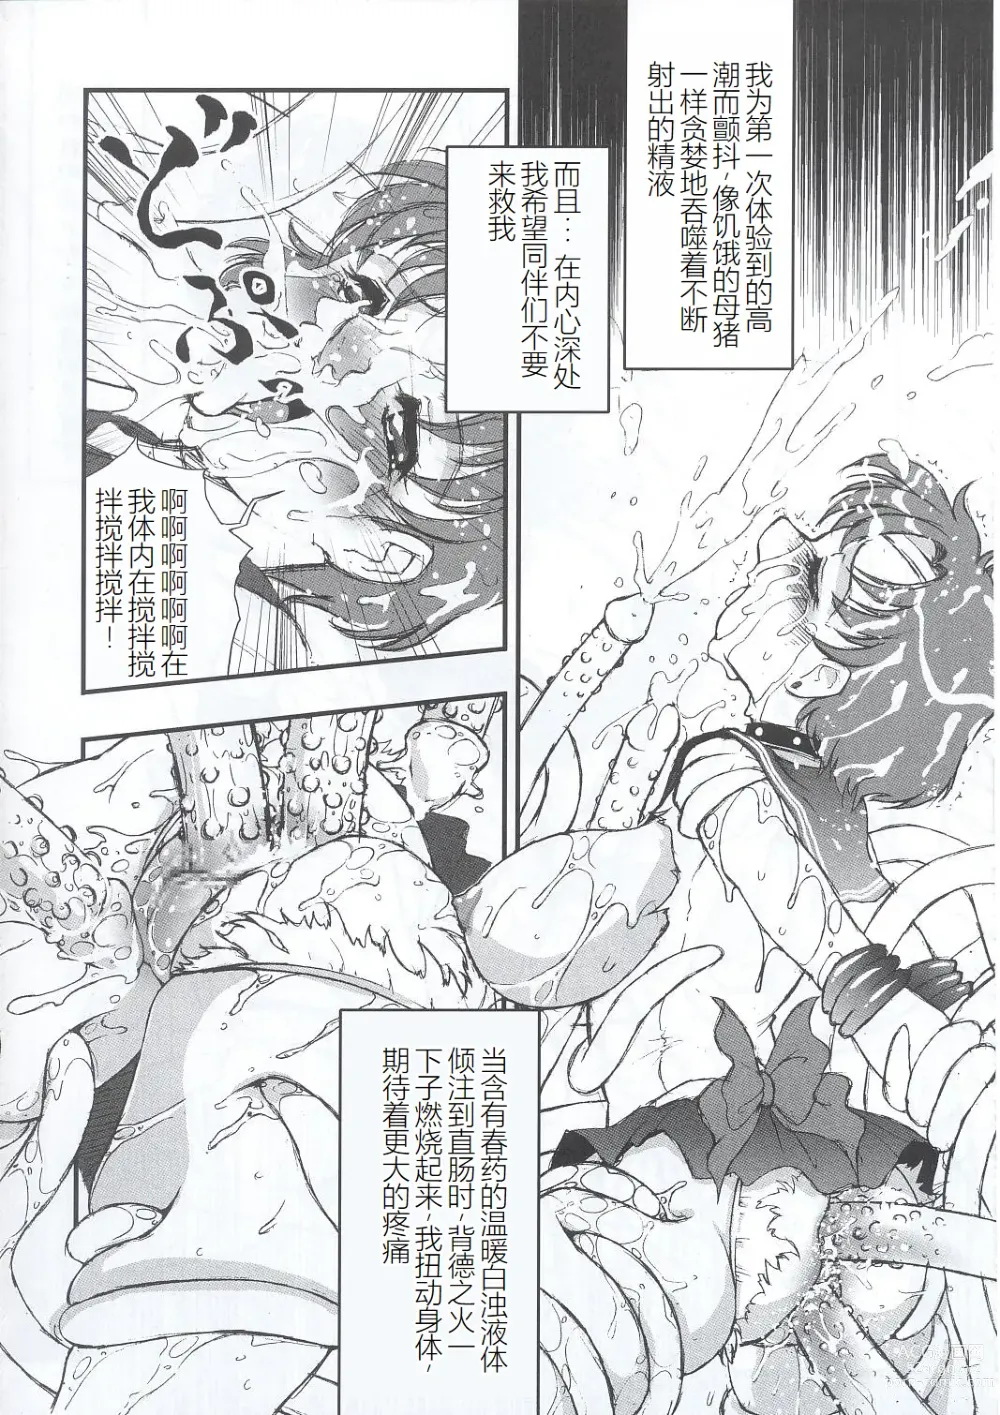 Page 13 of doujinshi SM